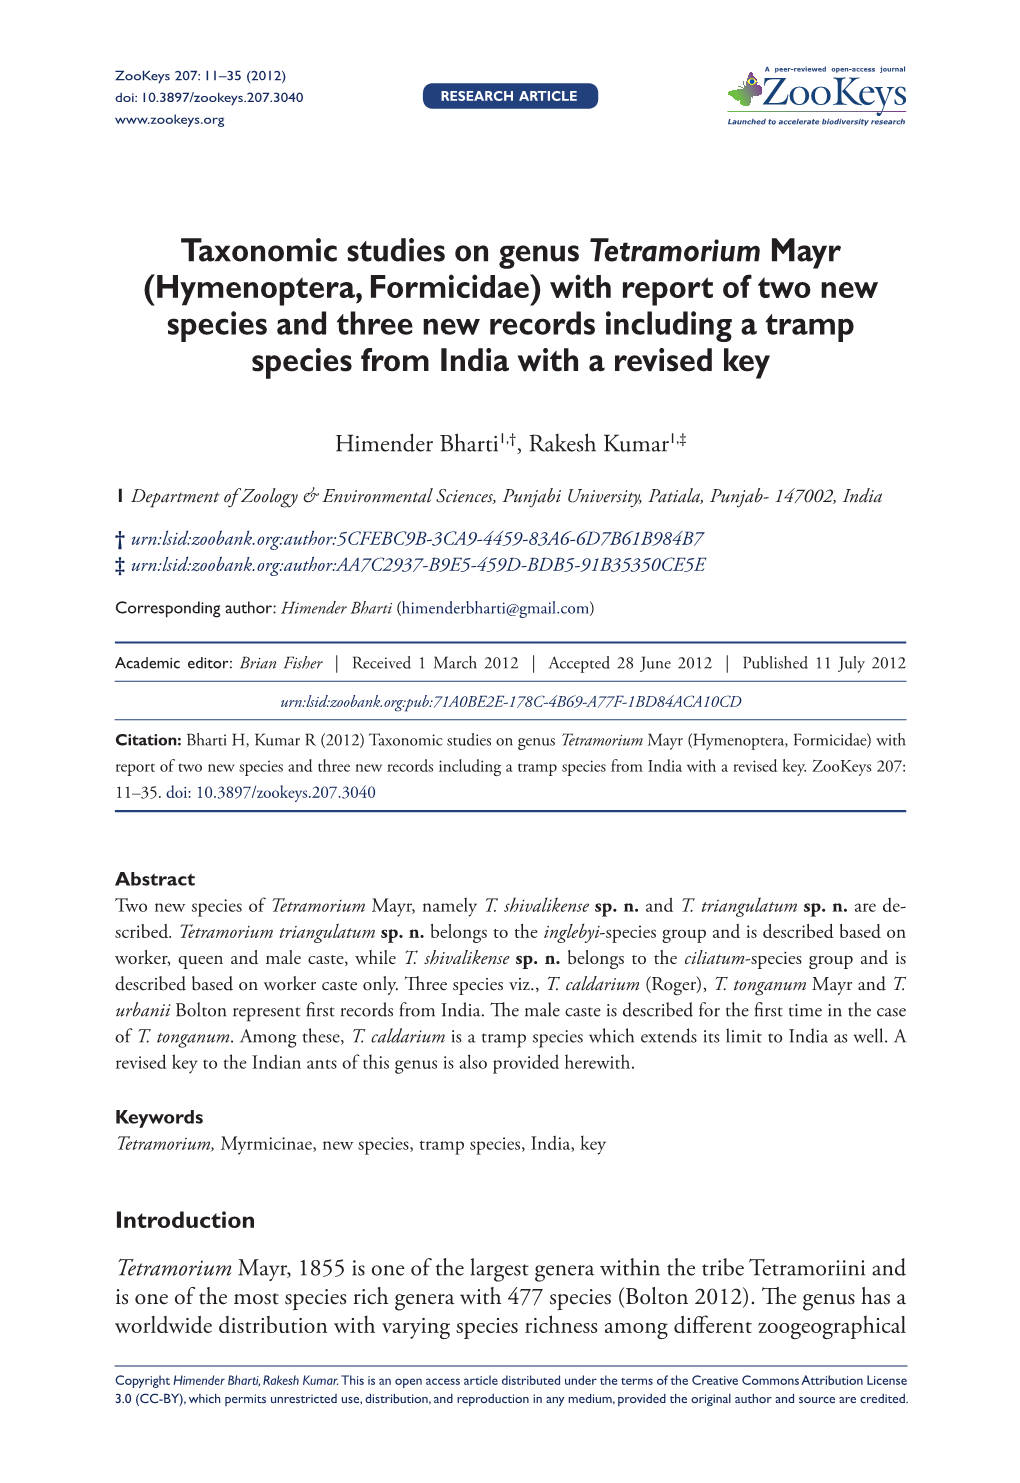 Taxonomic Studies on Genus Tetramorium Mayr (Hymenoptera